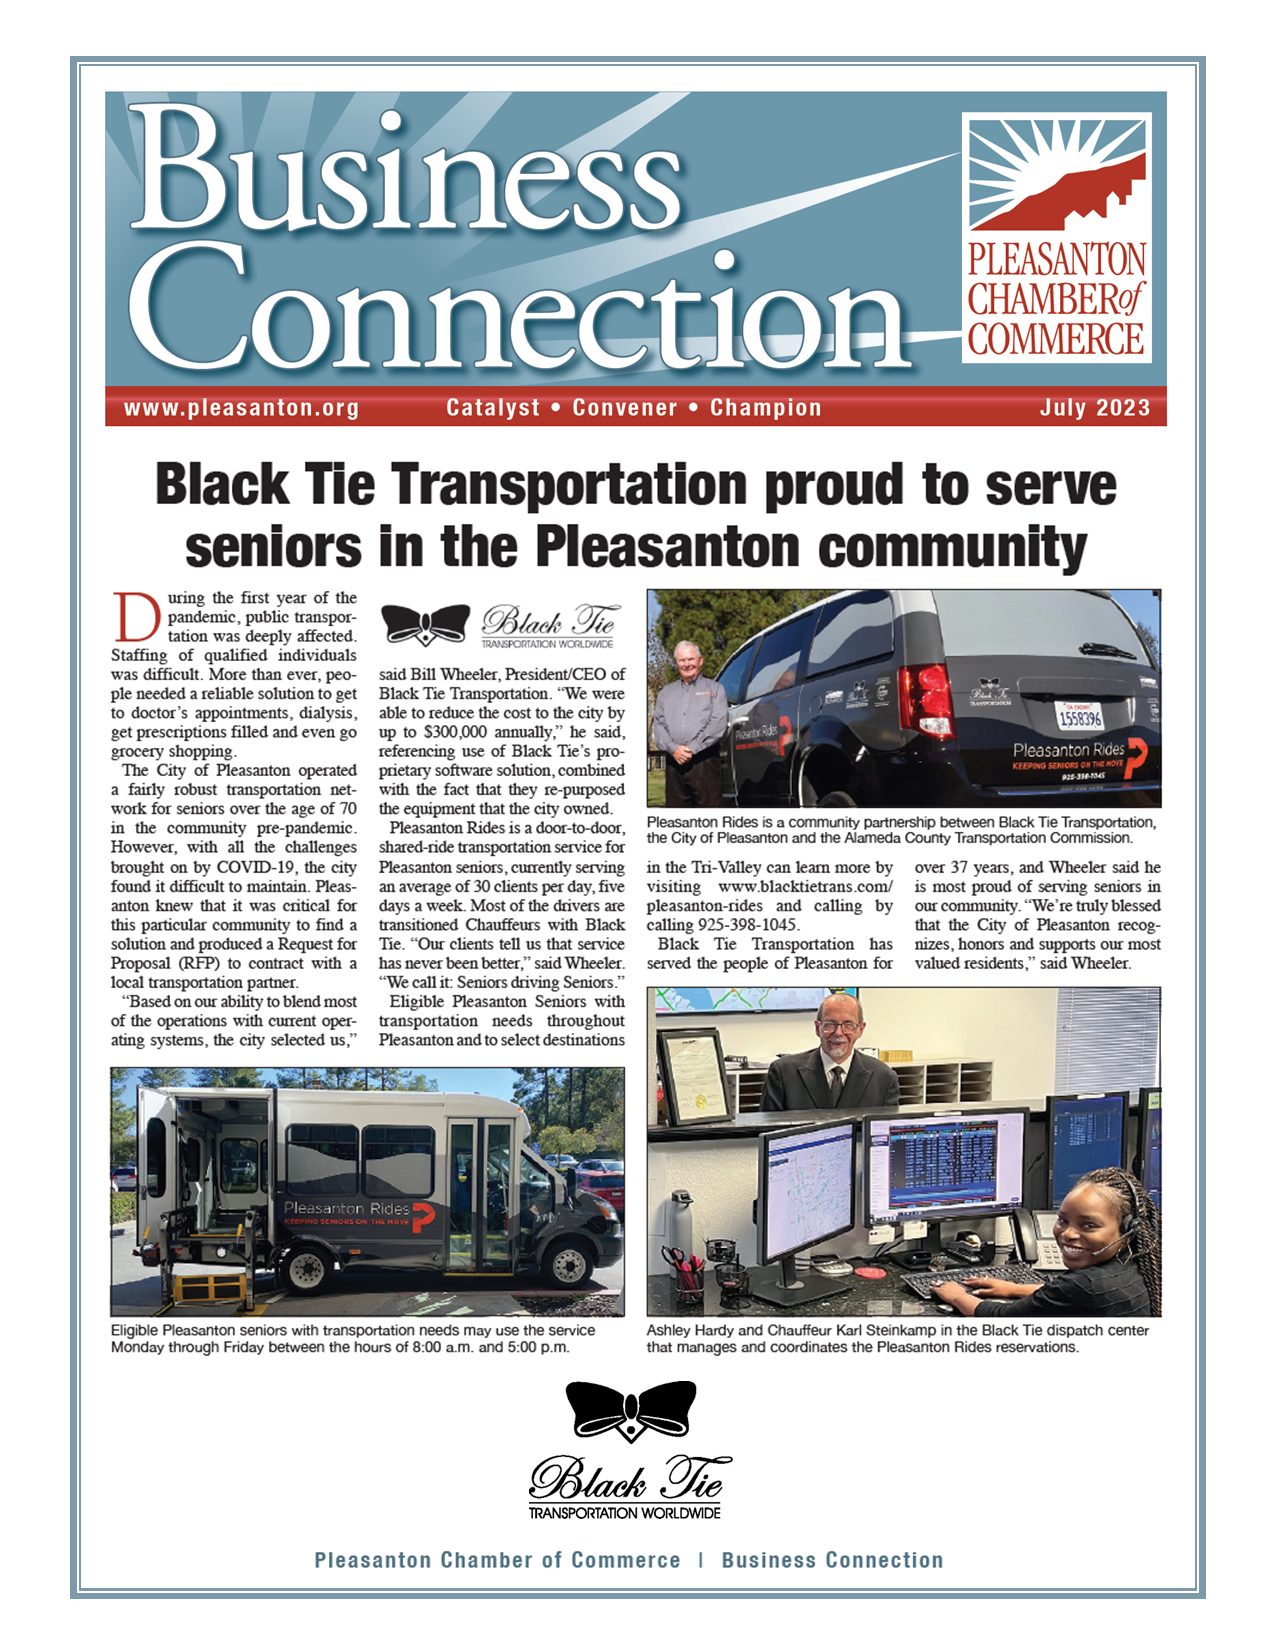 Black Tie Transportation article